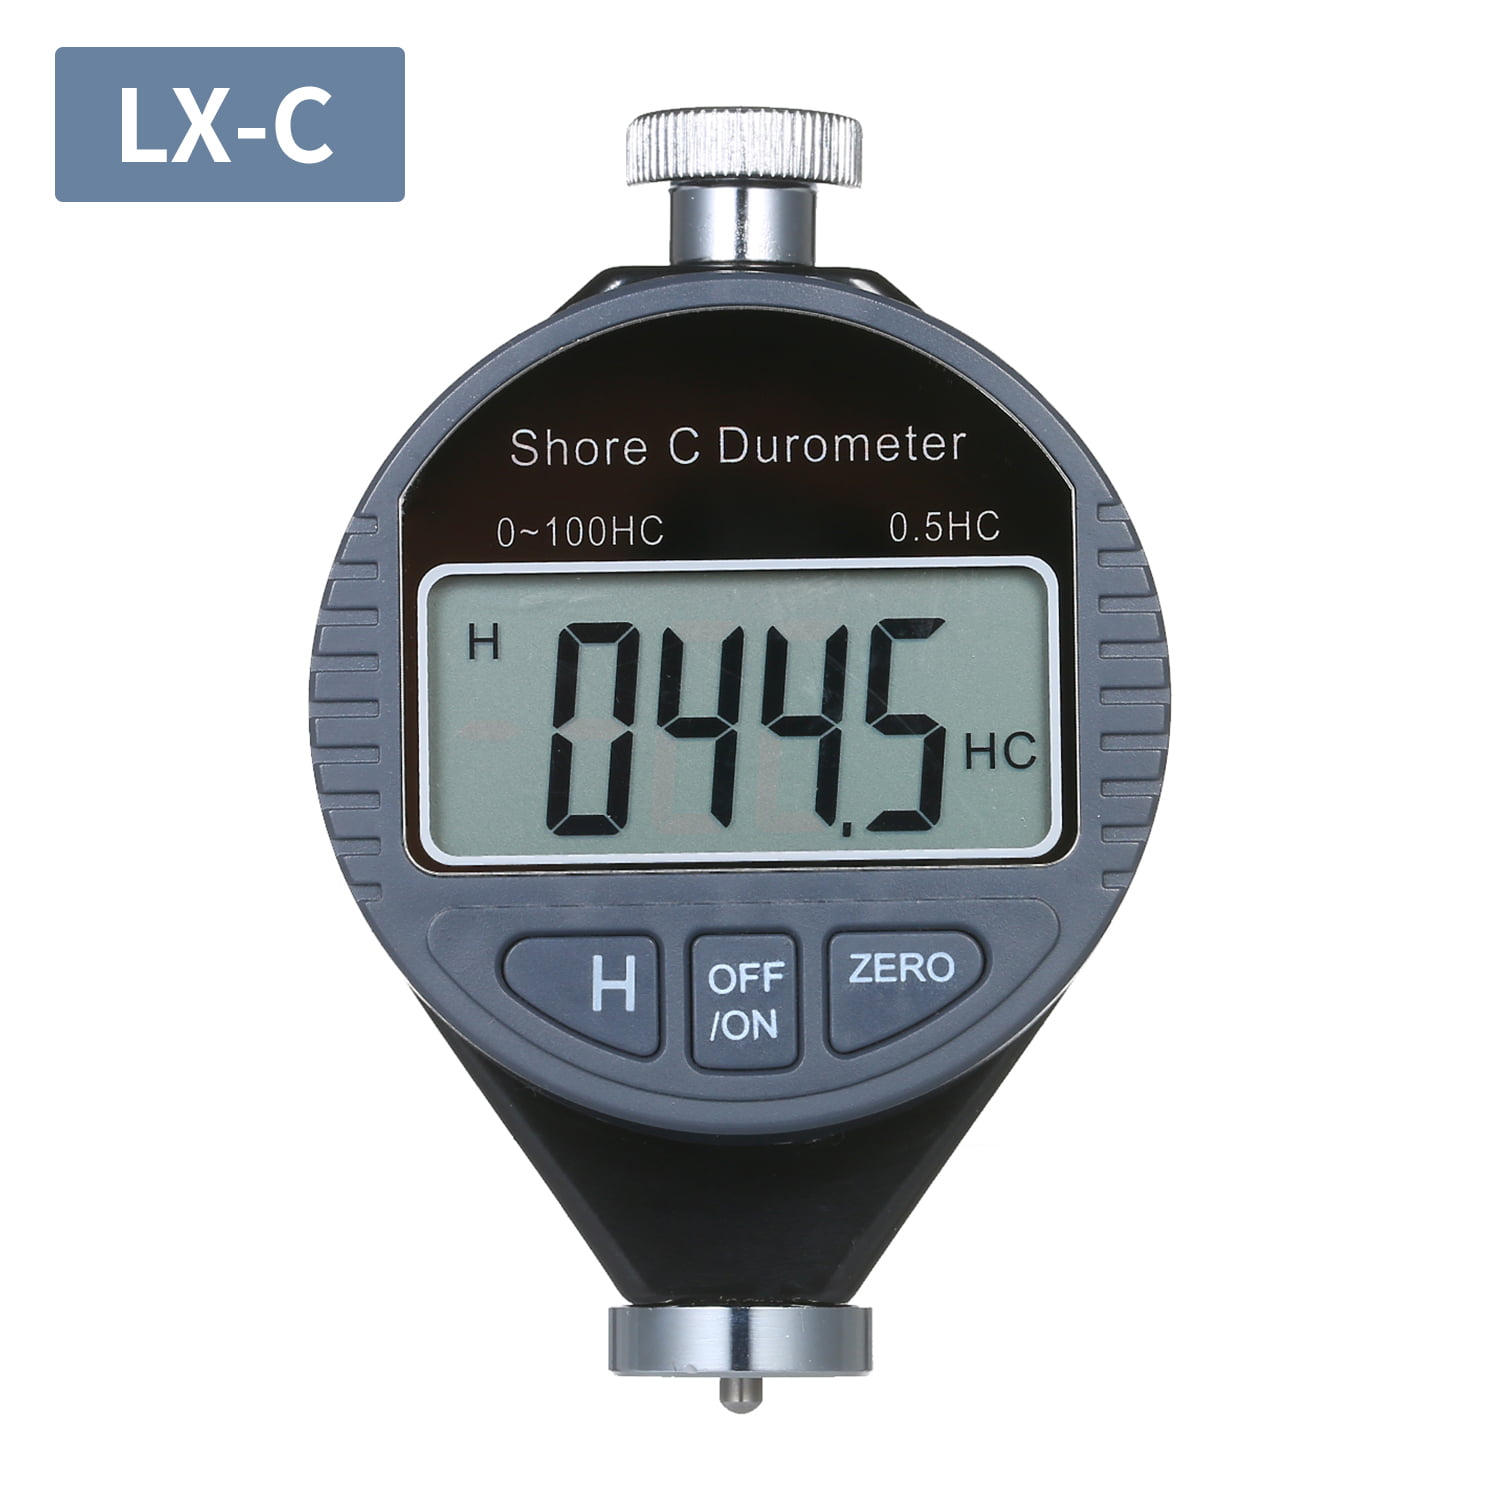 Details about   Portable 0-100HD Shore A/C/D Hardness Digital Hardness Meter Durometer Hardness 